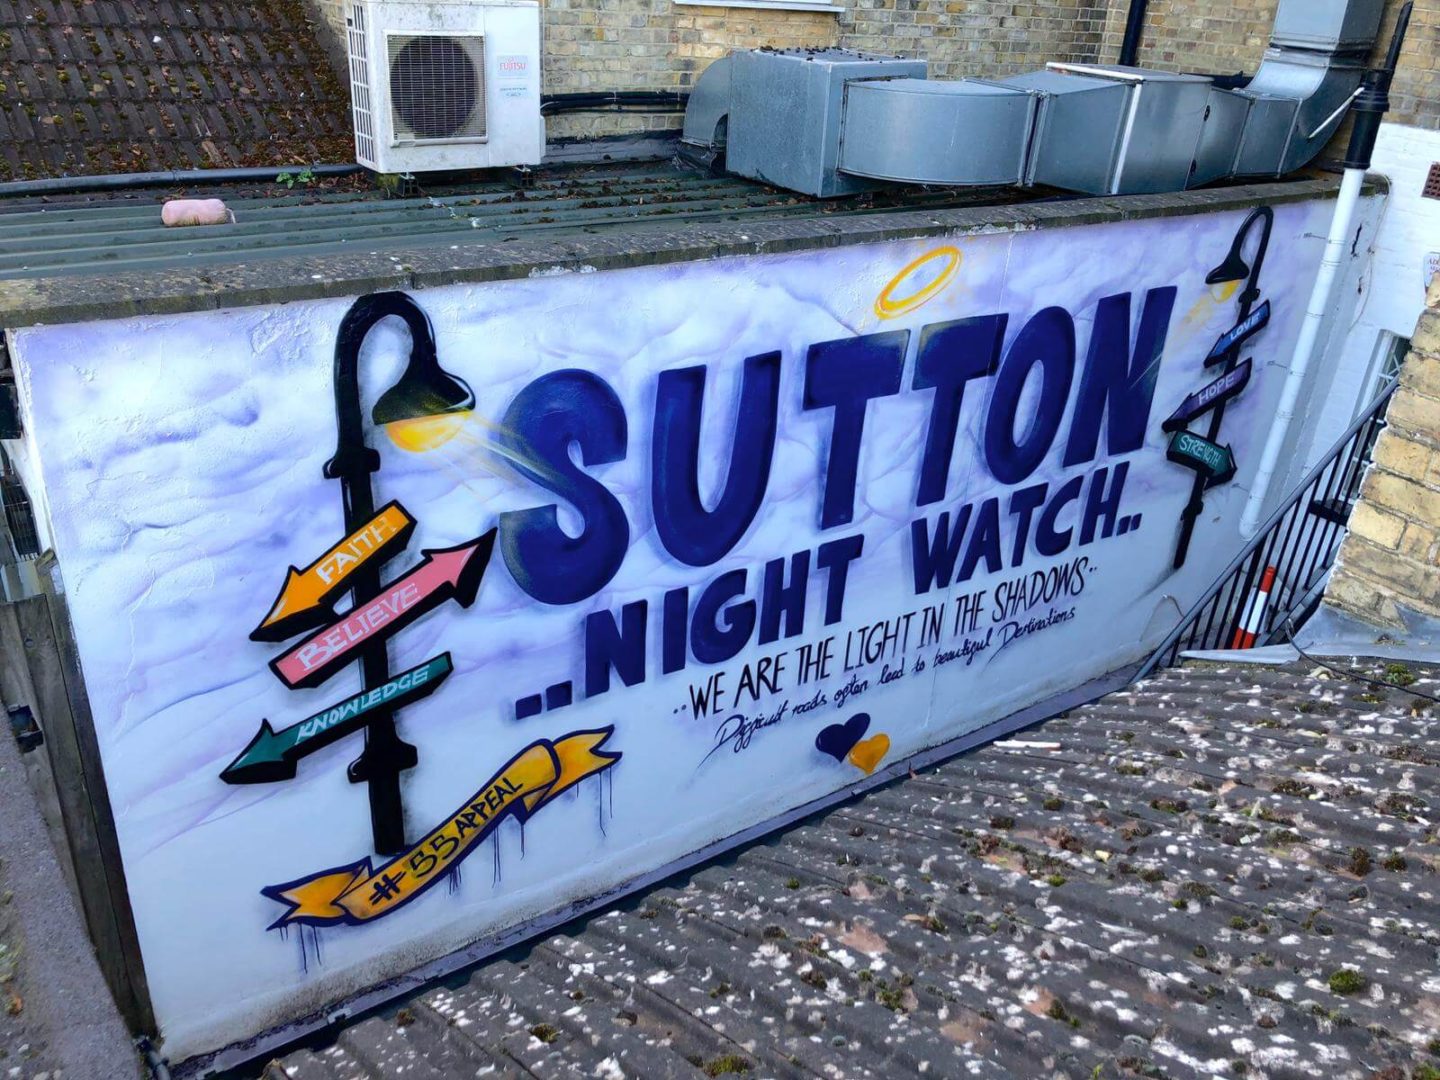 graffiti-mural-masters-at-sutton-night-watch-2